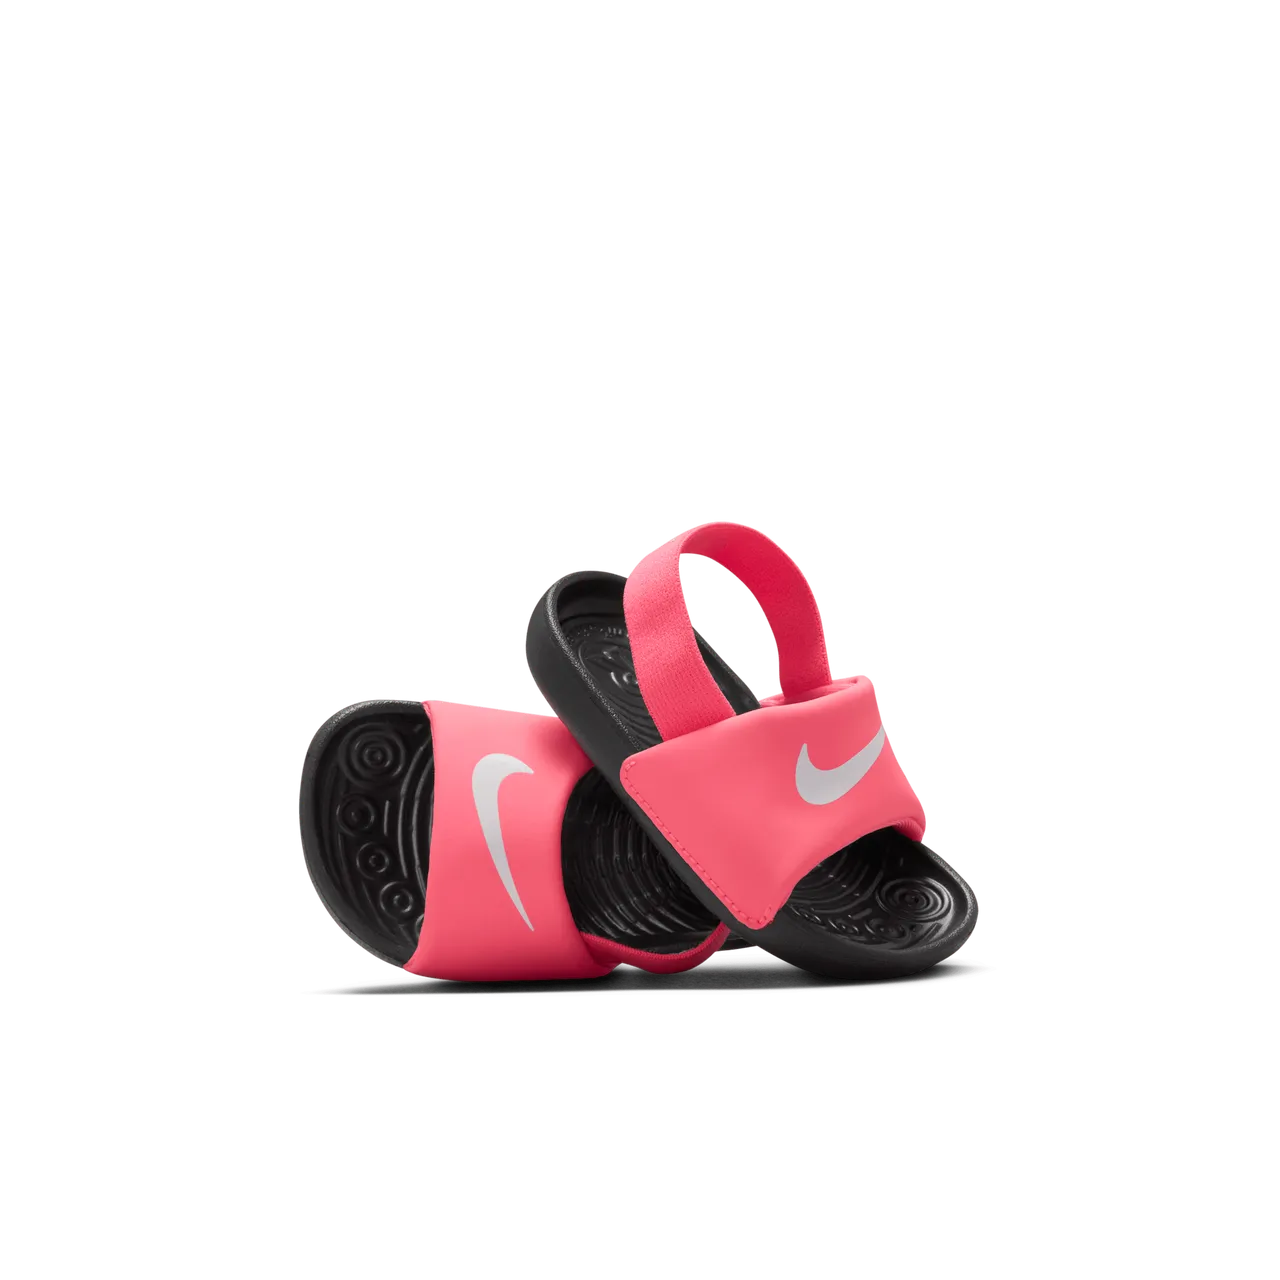 Nike Kawa Slipper voor baby's/peuters - Roze